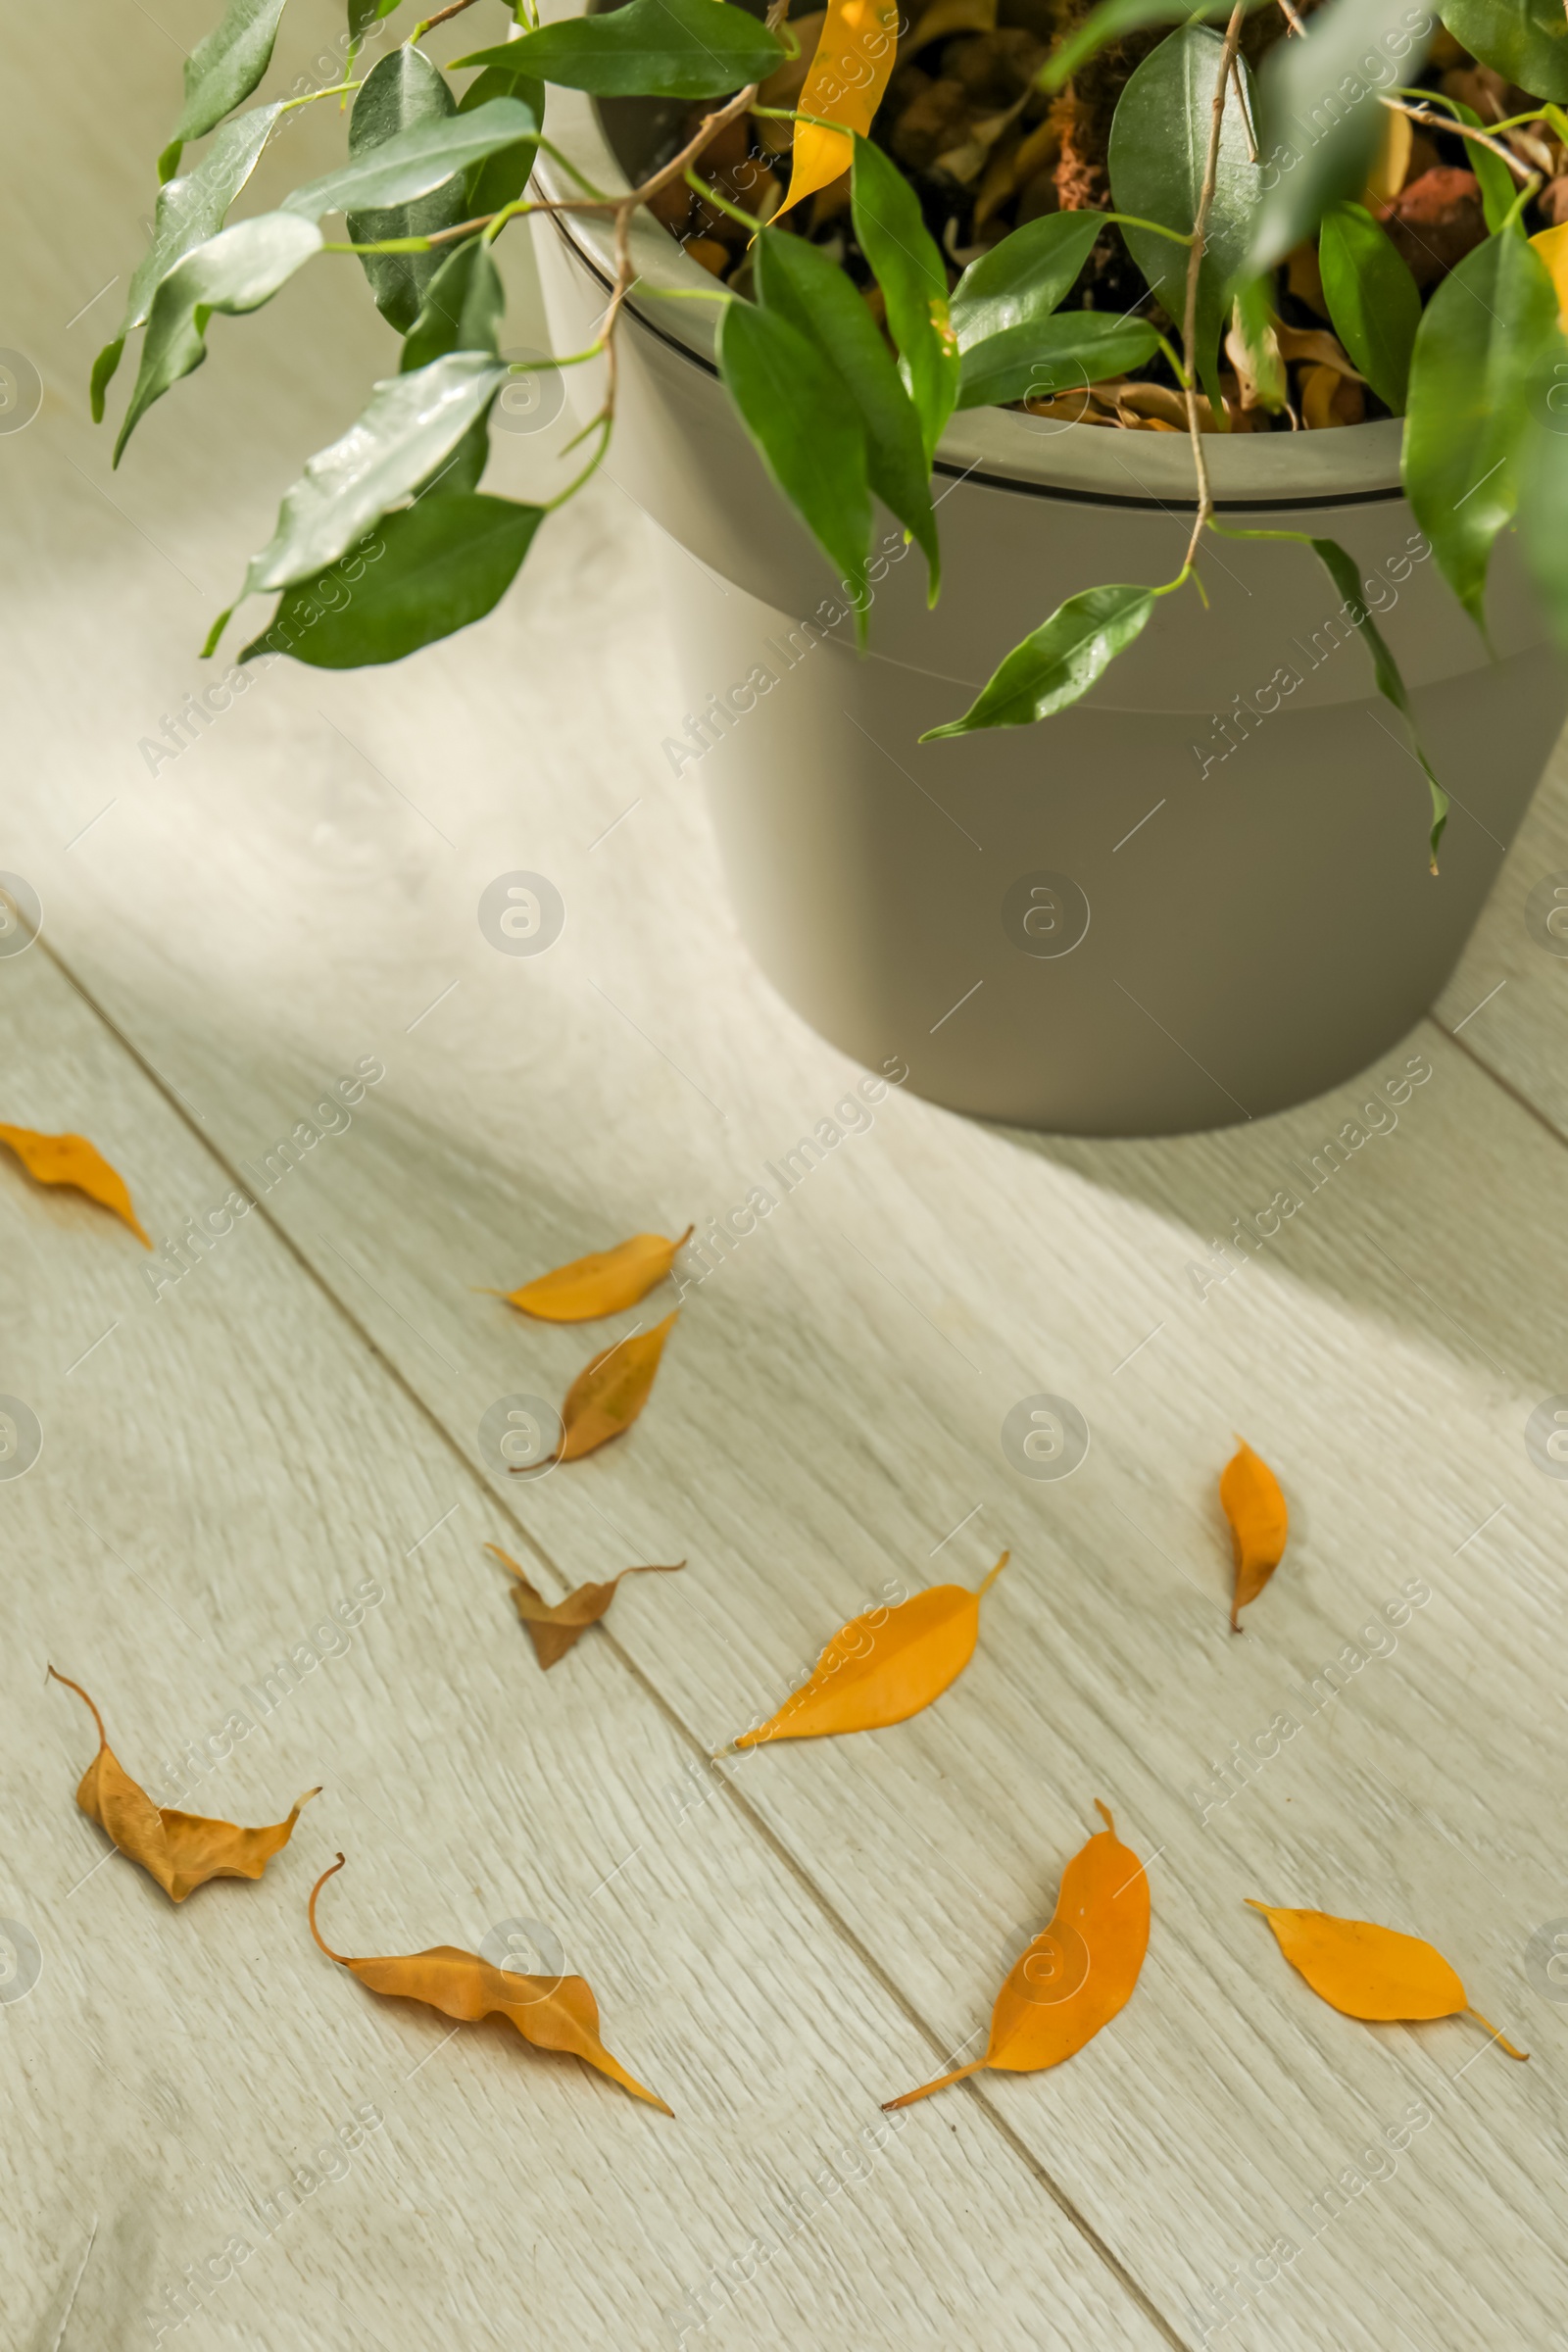 Photo of Fallen yellow leaves on floor near houseplant indoors